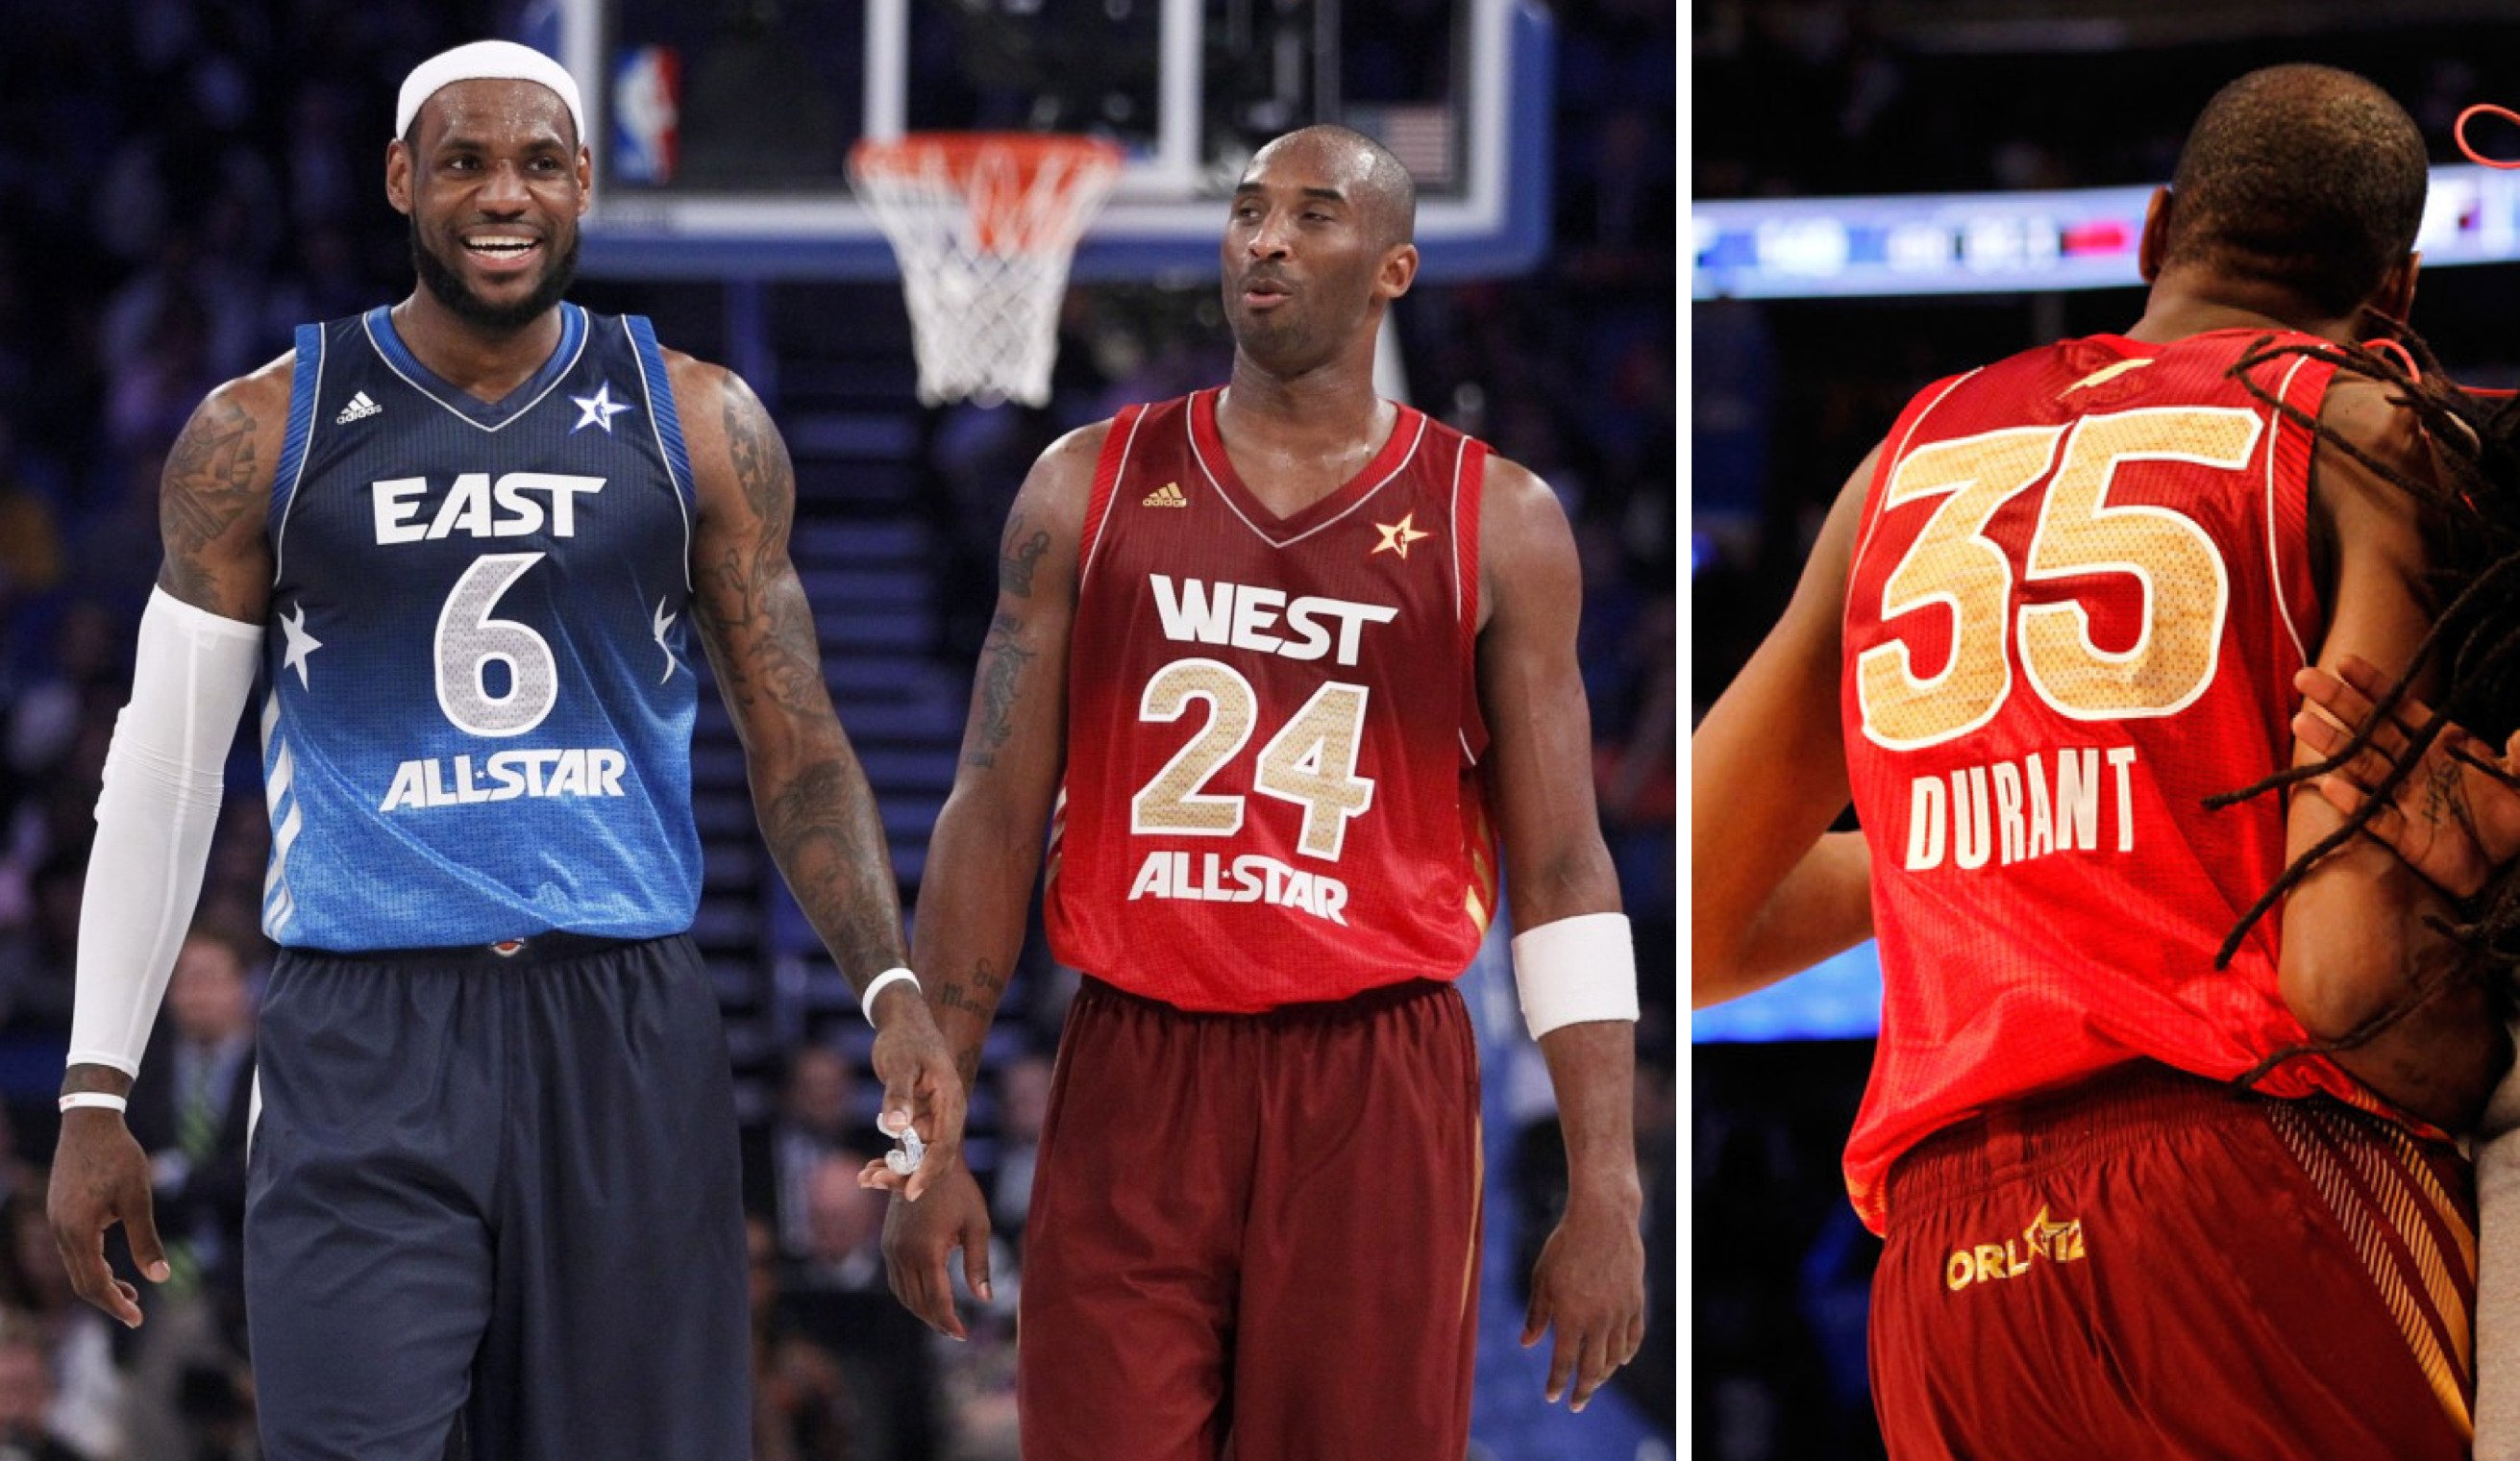 2012 NBA All-Star jerseys